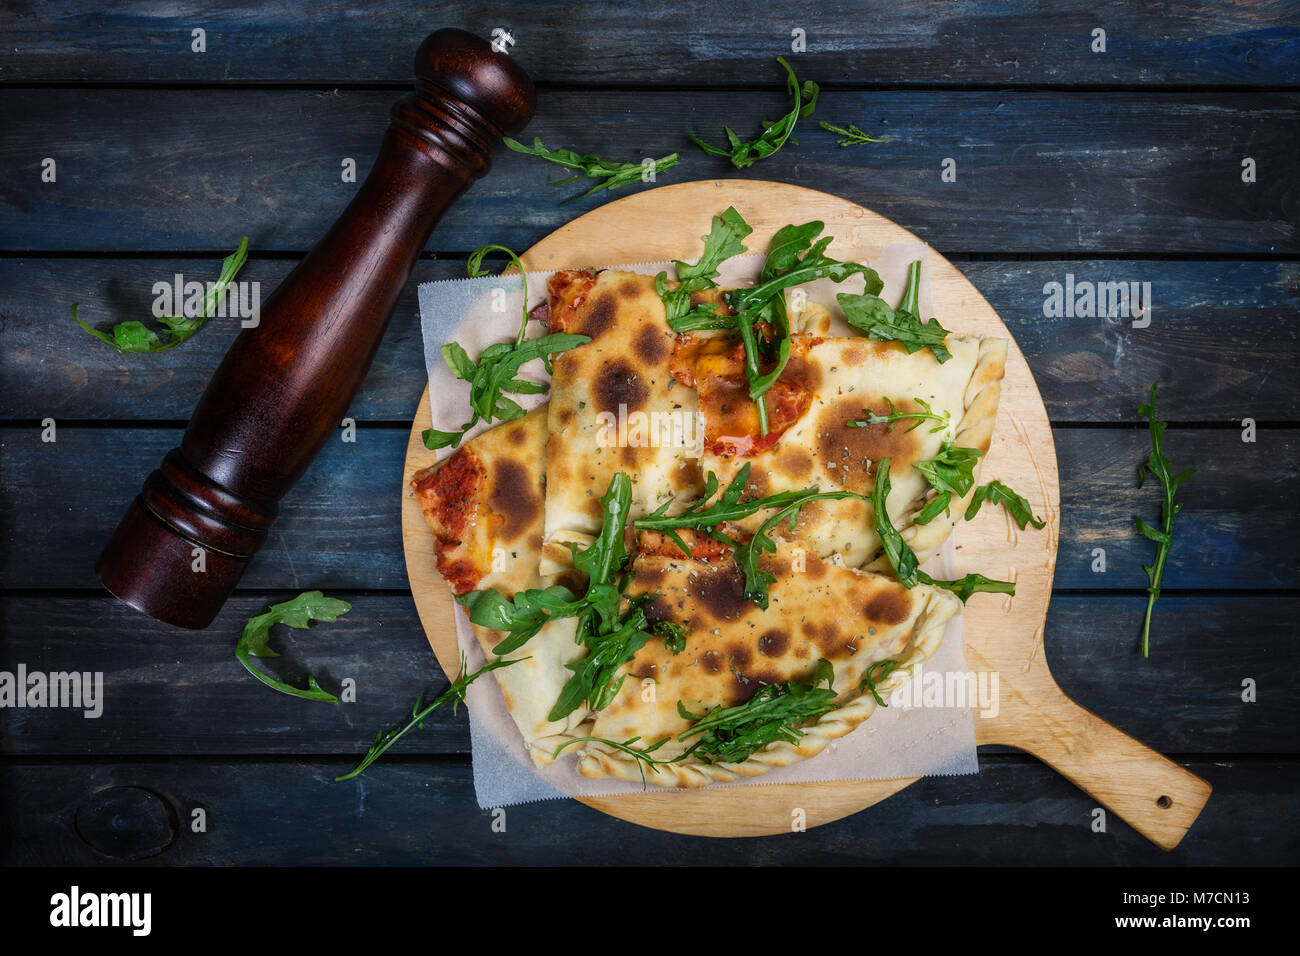 Calzone - Stuffed Pizza with ham, mushrooms, arugula and cheese. Stock Photo